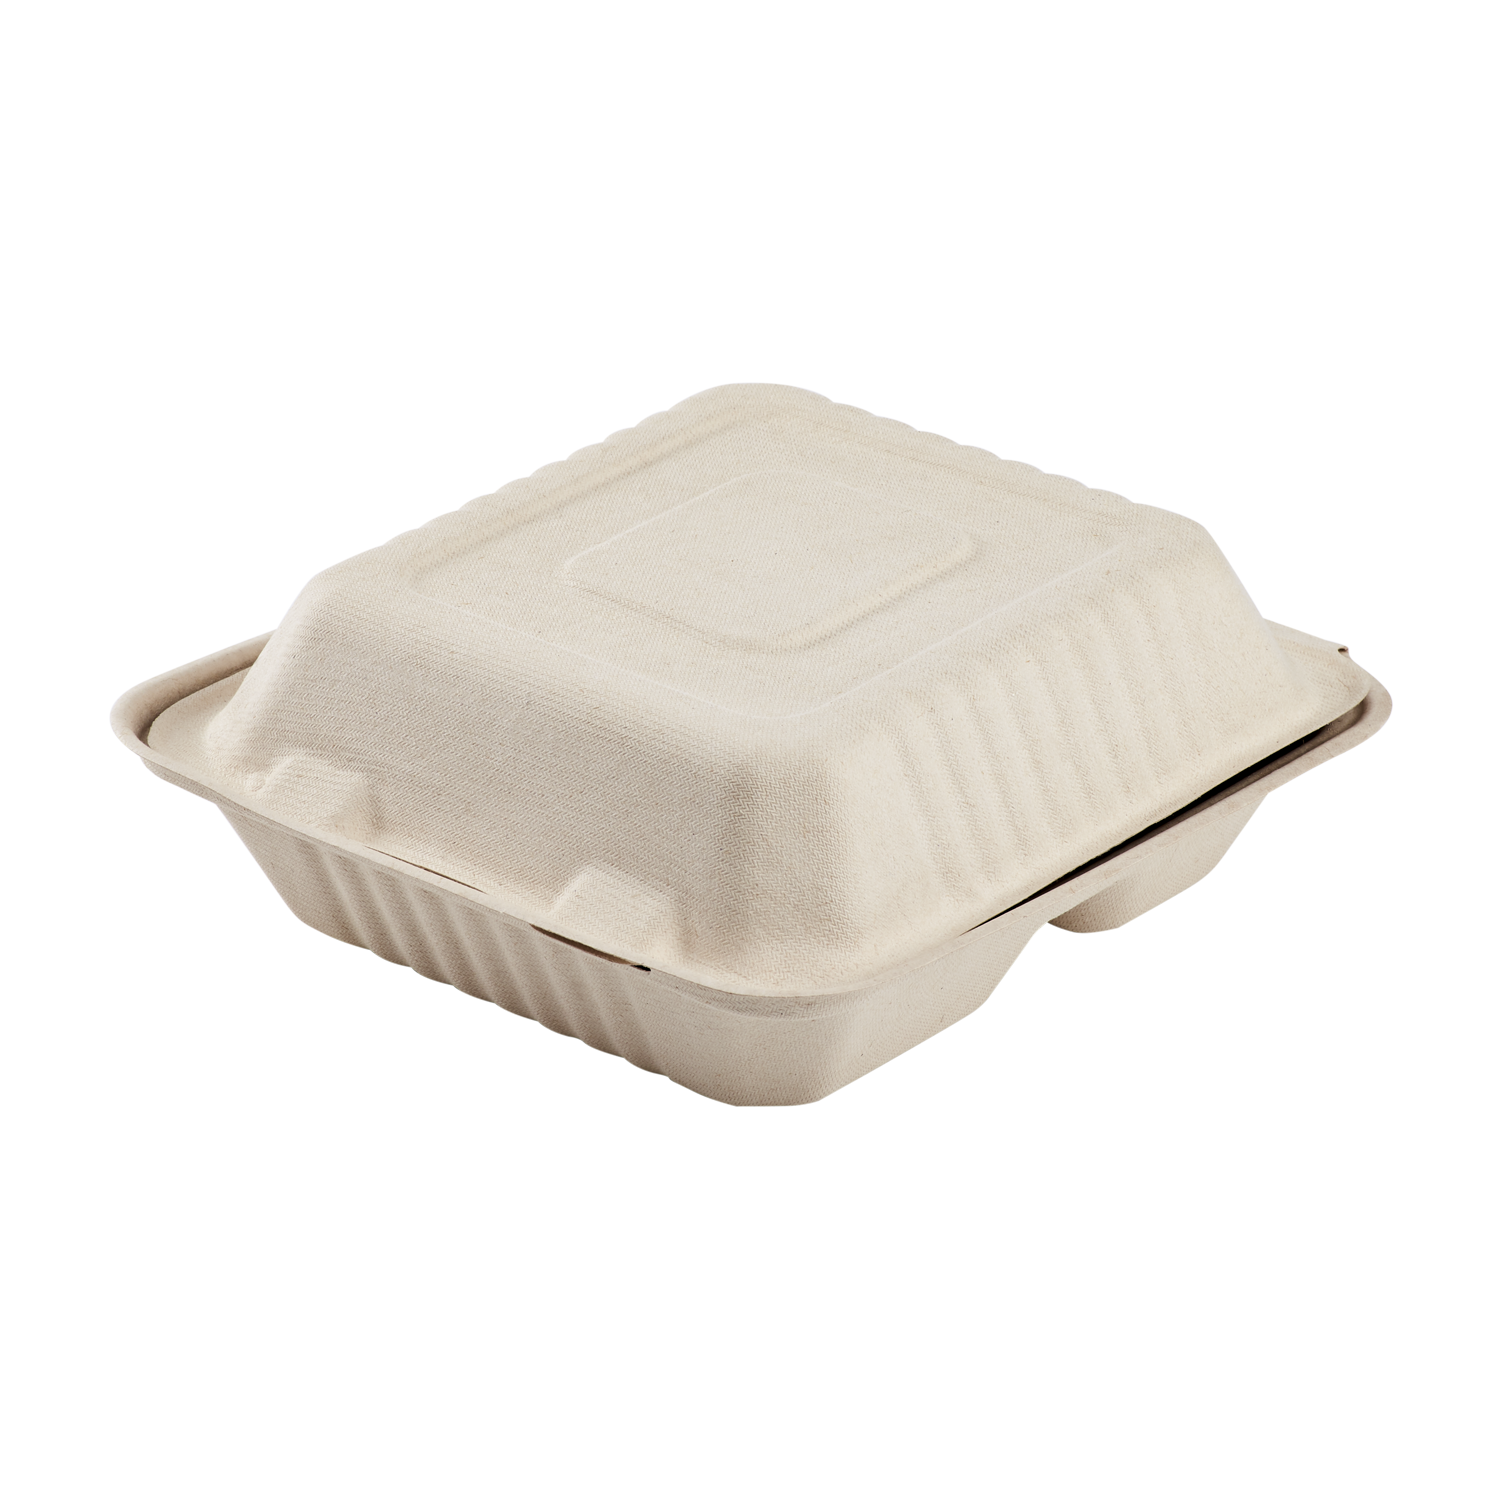 3 compartment biodegradable takeaway food box with lid - Buy biodegradable  takeaway food box Product on Food Packaging - Shanghai SUNKEA Packaging  Co., Ltd.